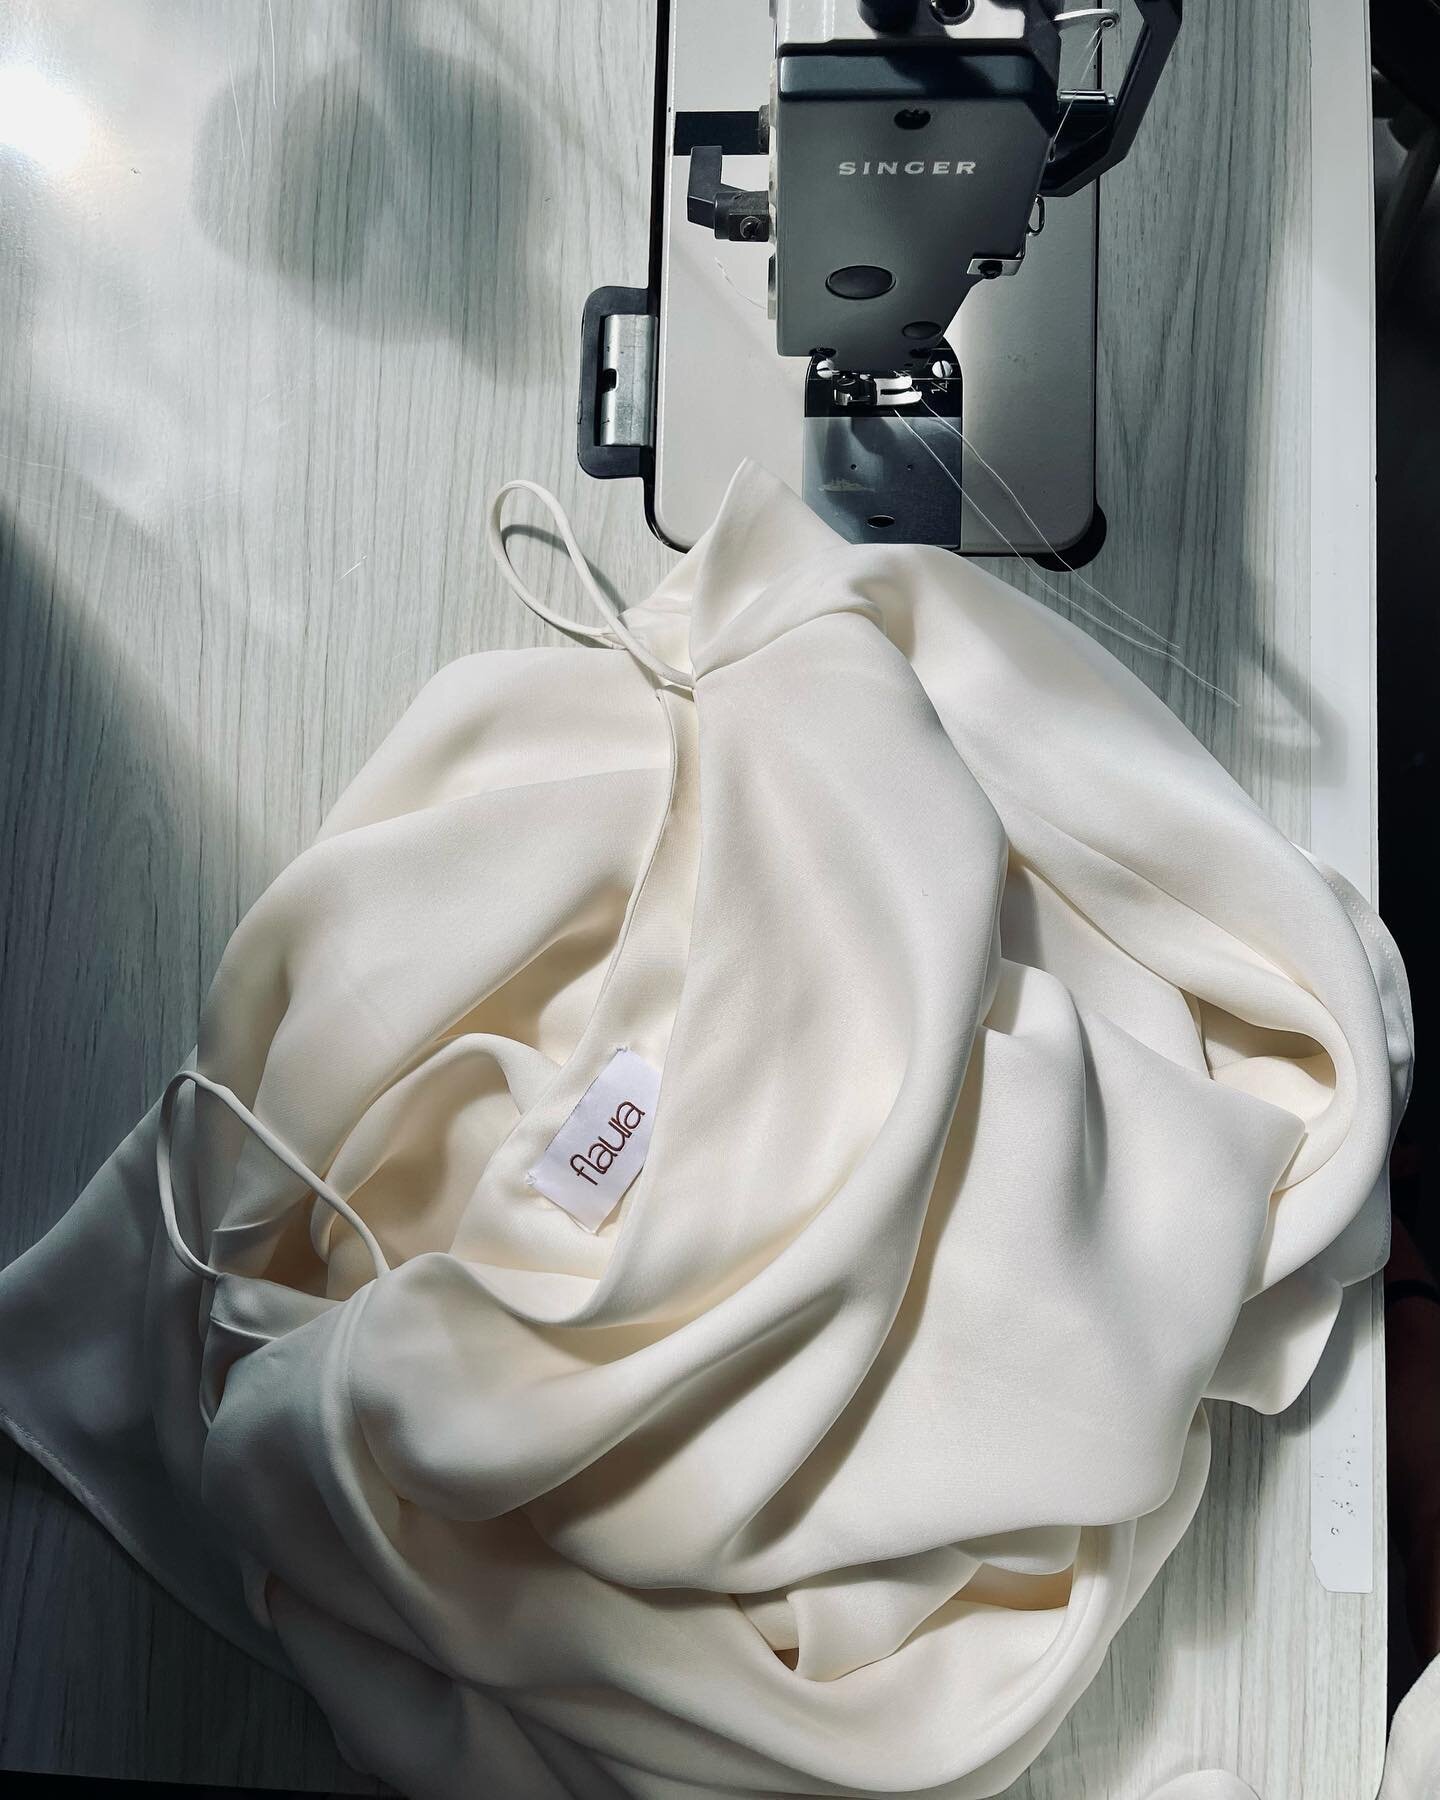 B E S P O K E .
.
.
.
#flaura #flaurabridal #bespoke #bespokebridal #dressmaking #weddinggown #biascut #silkslip #silk #sewing #handmade